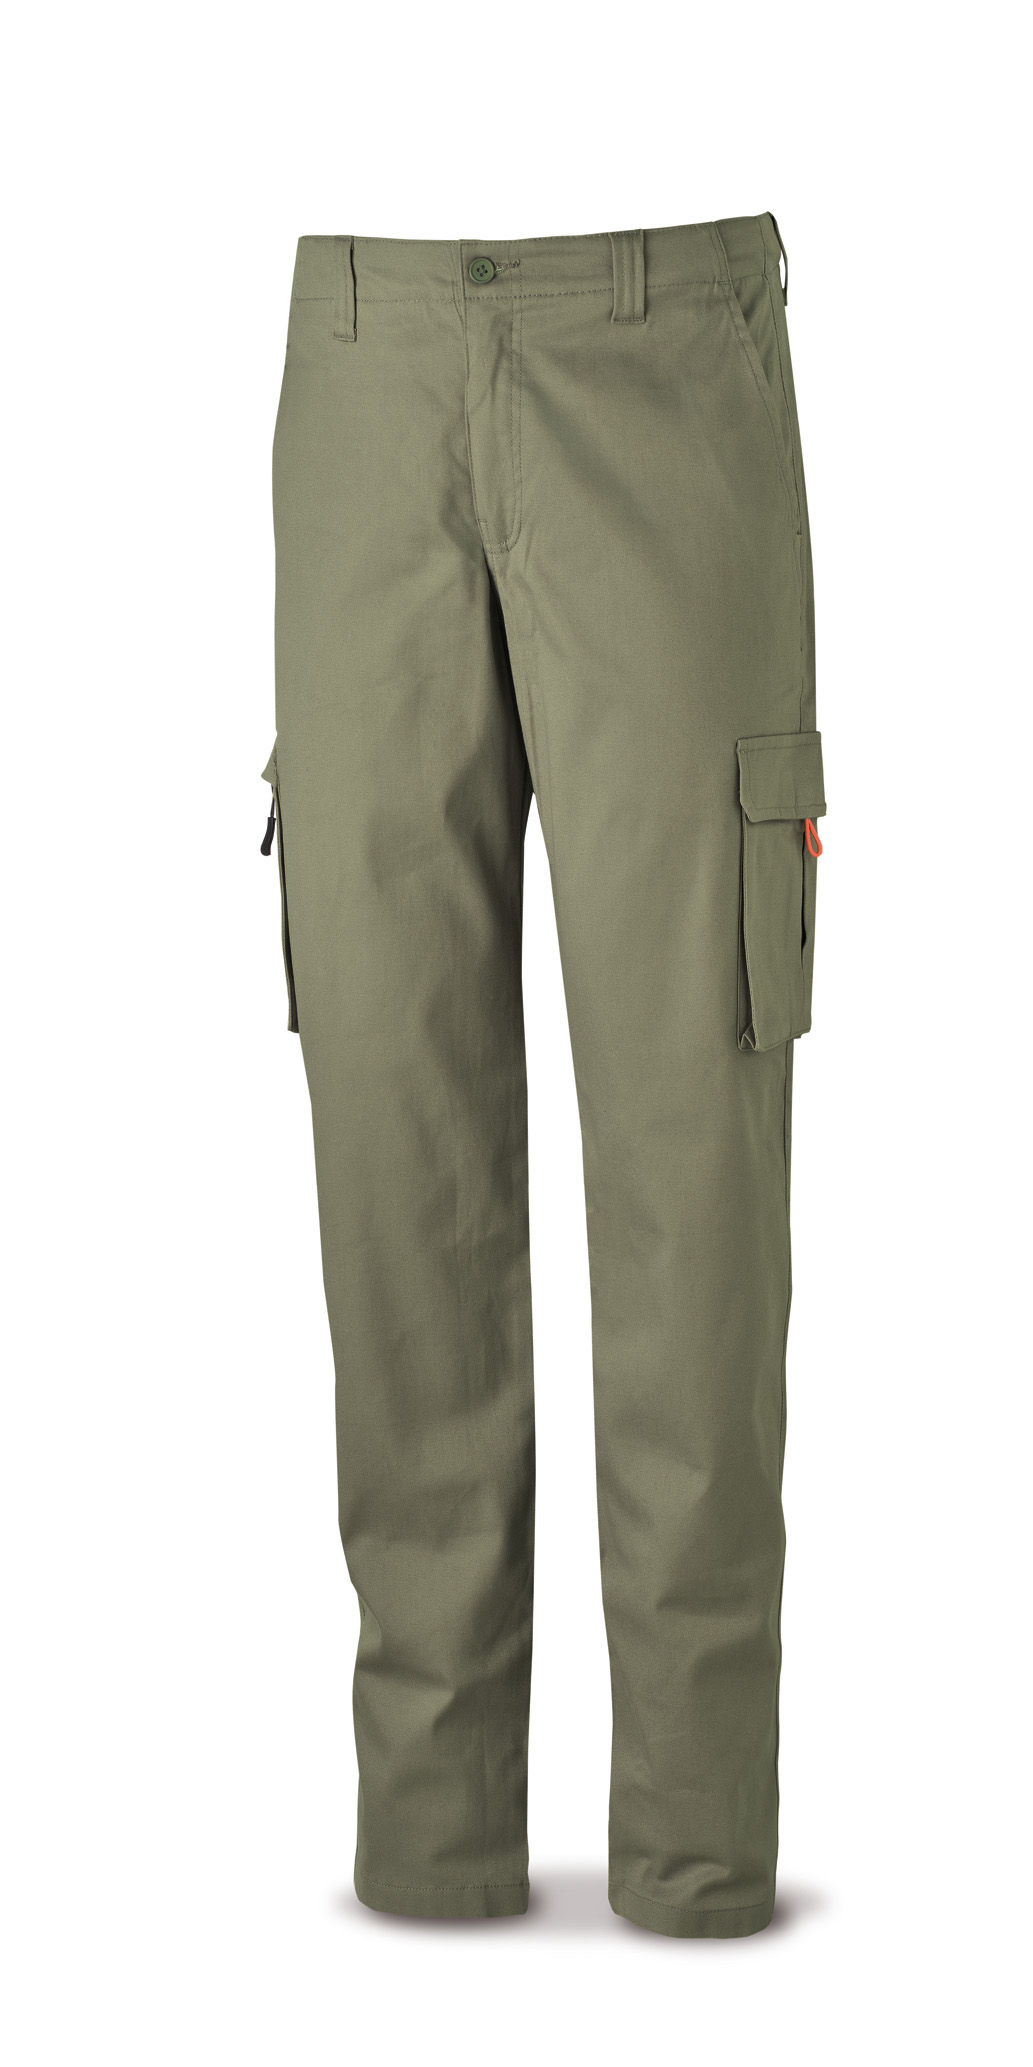 588-PELASRK Workwear Casual Series ELASTIC cotton and Elastane pants. Khaki.